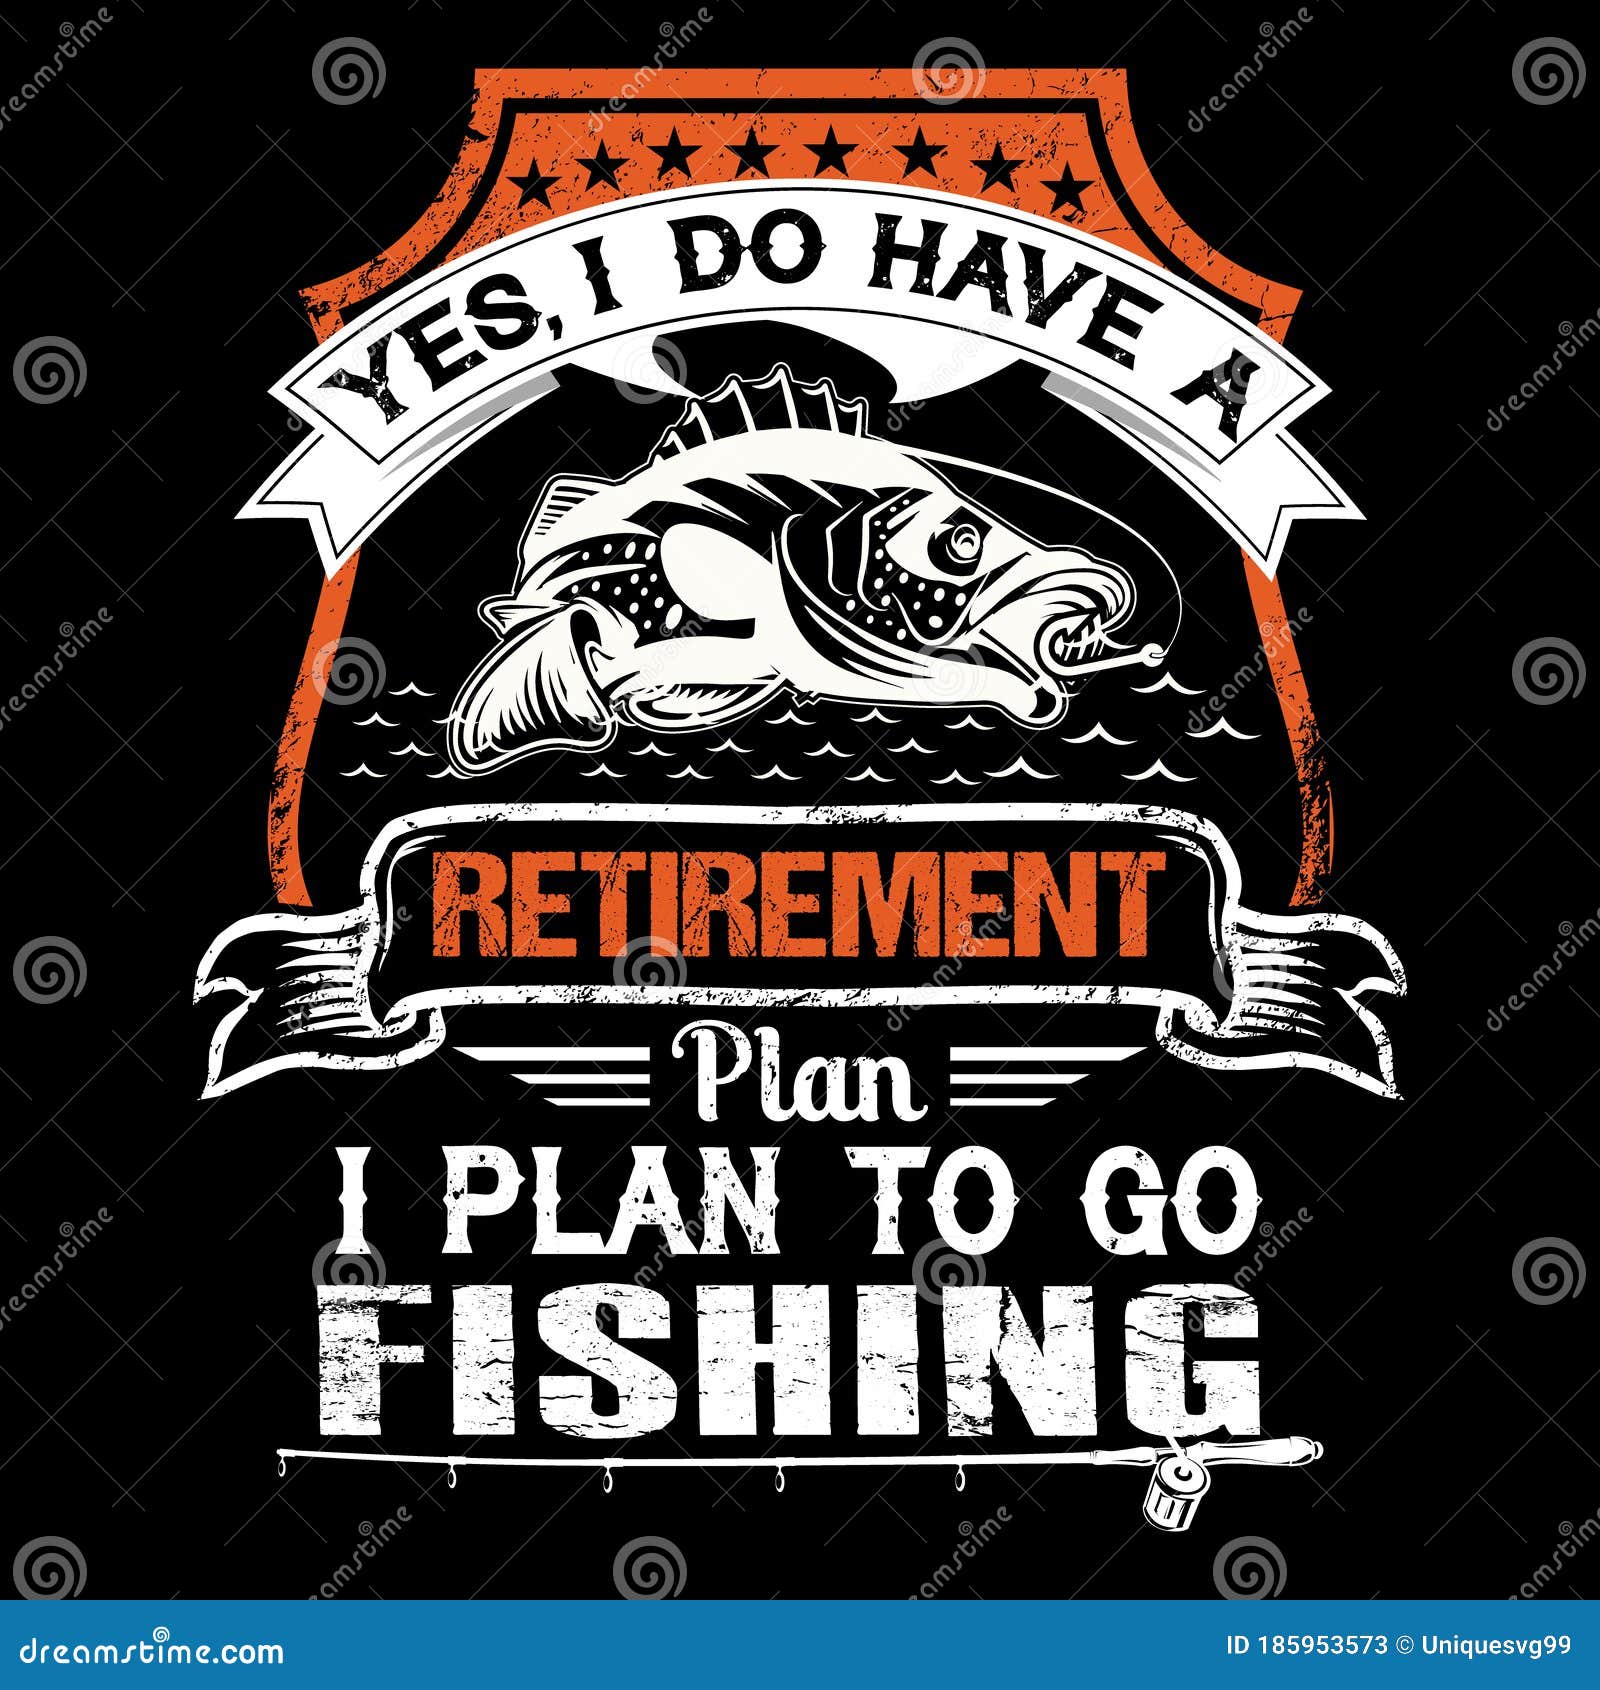 https://thumbs.dreamstime.com/z/yes-i-do-have-retirement-plan-i-plan-to-go-fishing-fishing-t-shirt-design-t-shirt-design-vintage-fishing-emblems-boat-fish-yes-i-185953573.jpg